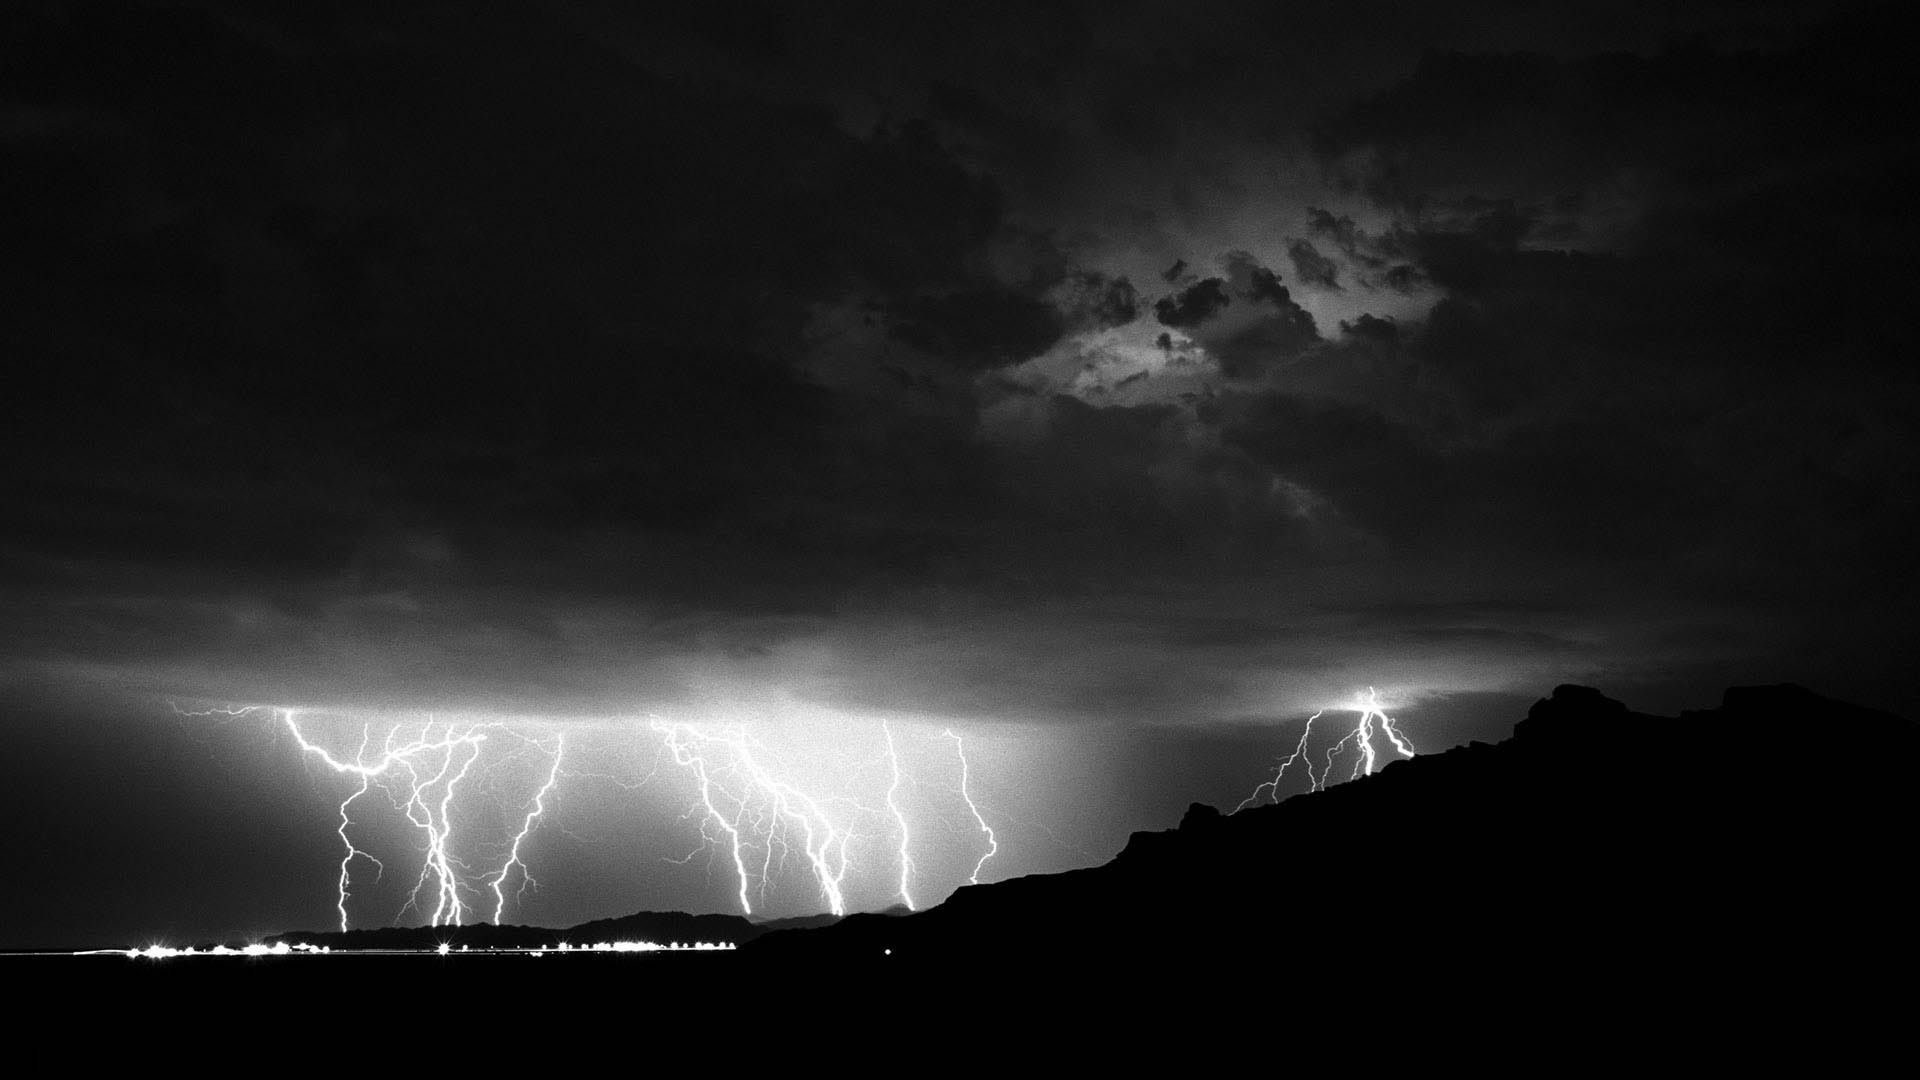 A black and white photo of lightning striking the ground - Lightning, storm